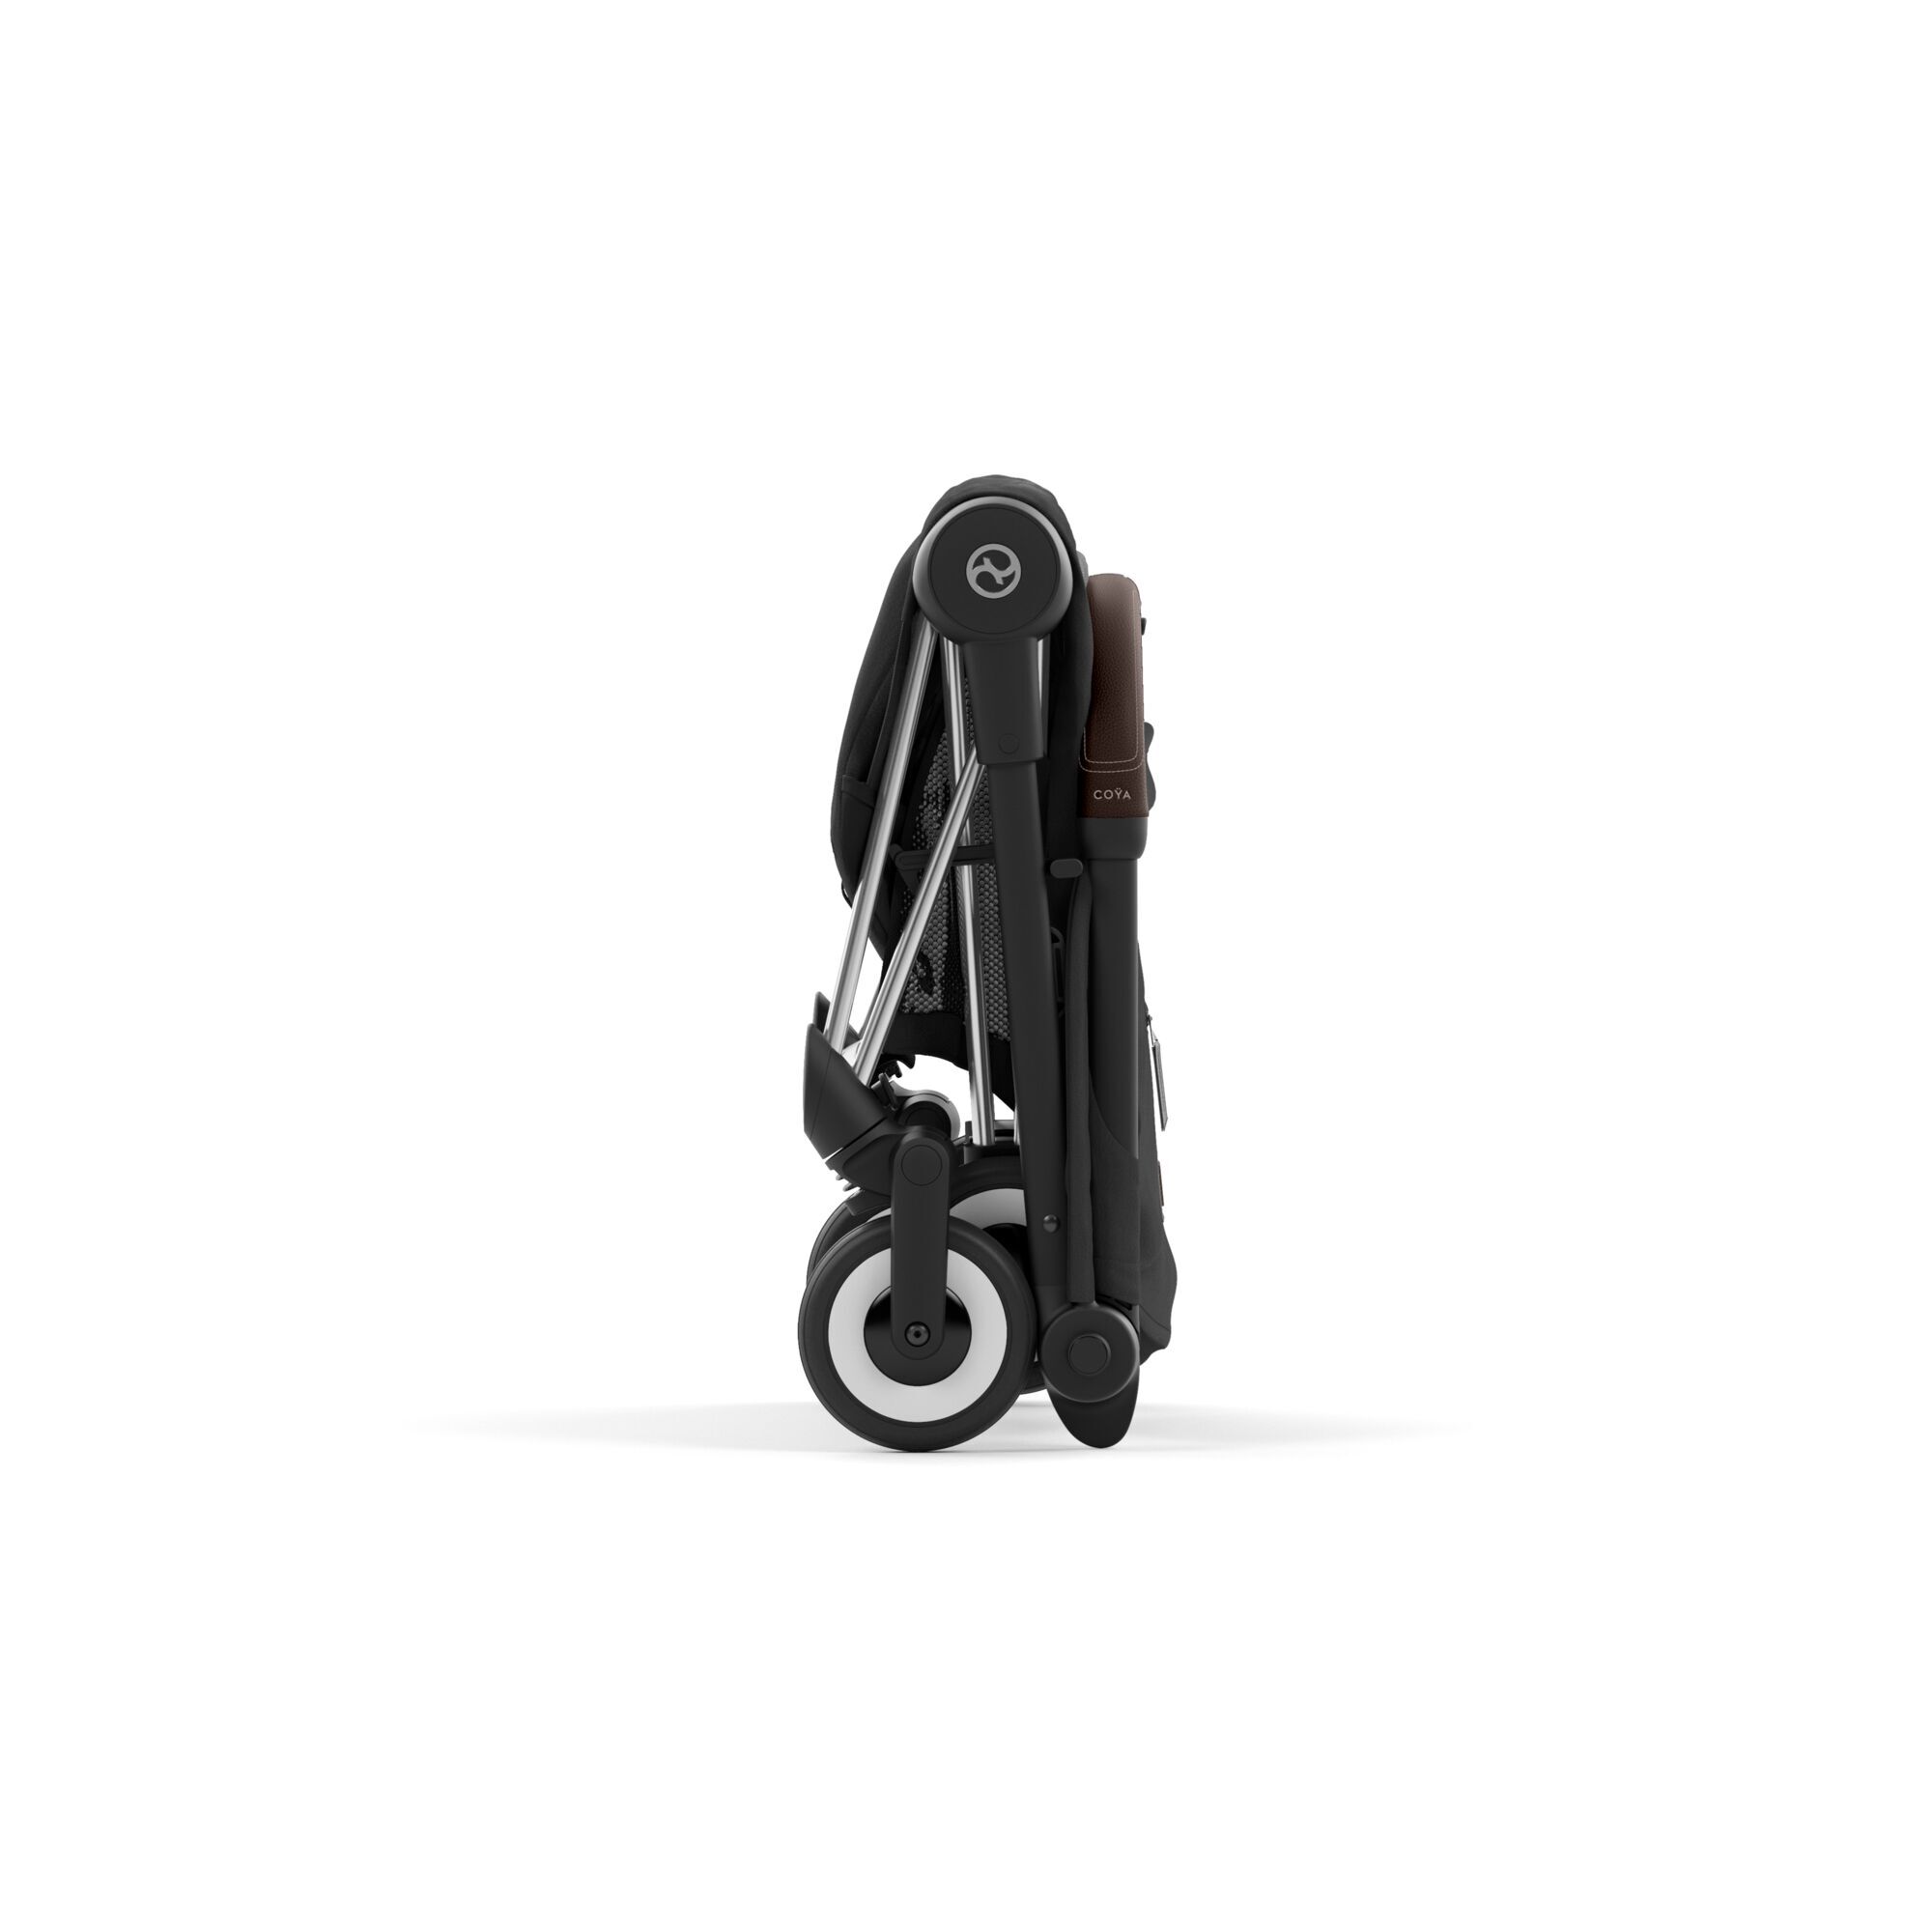 Cybex Coya Stroller vs. Popular Lightweight Travel Strollers